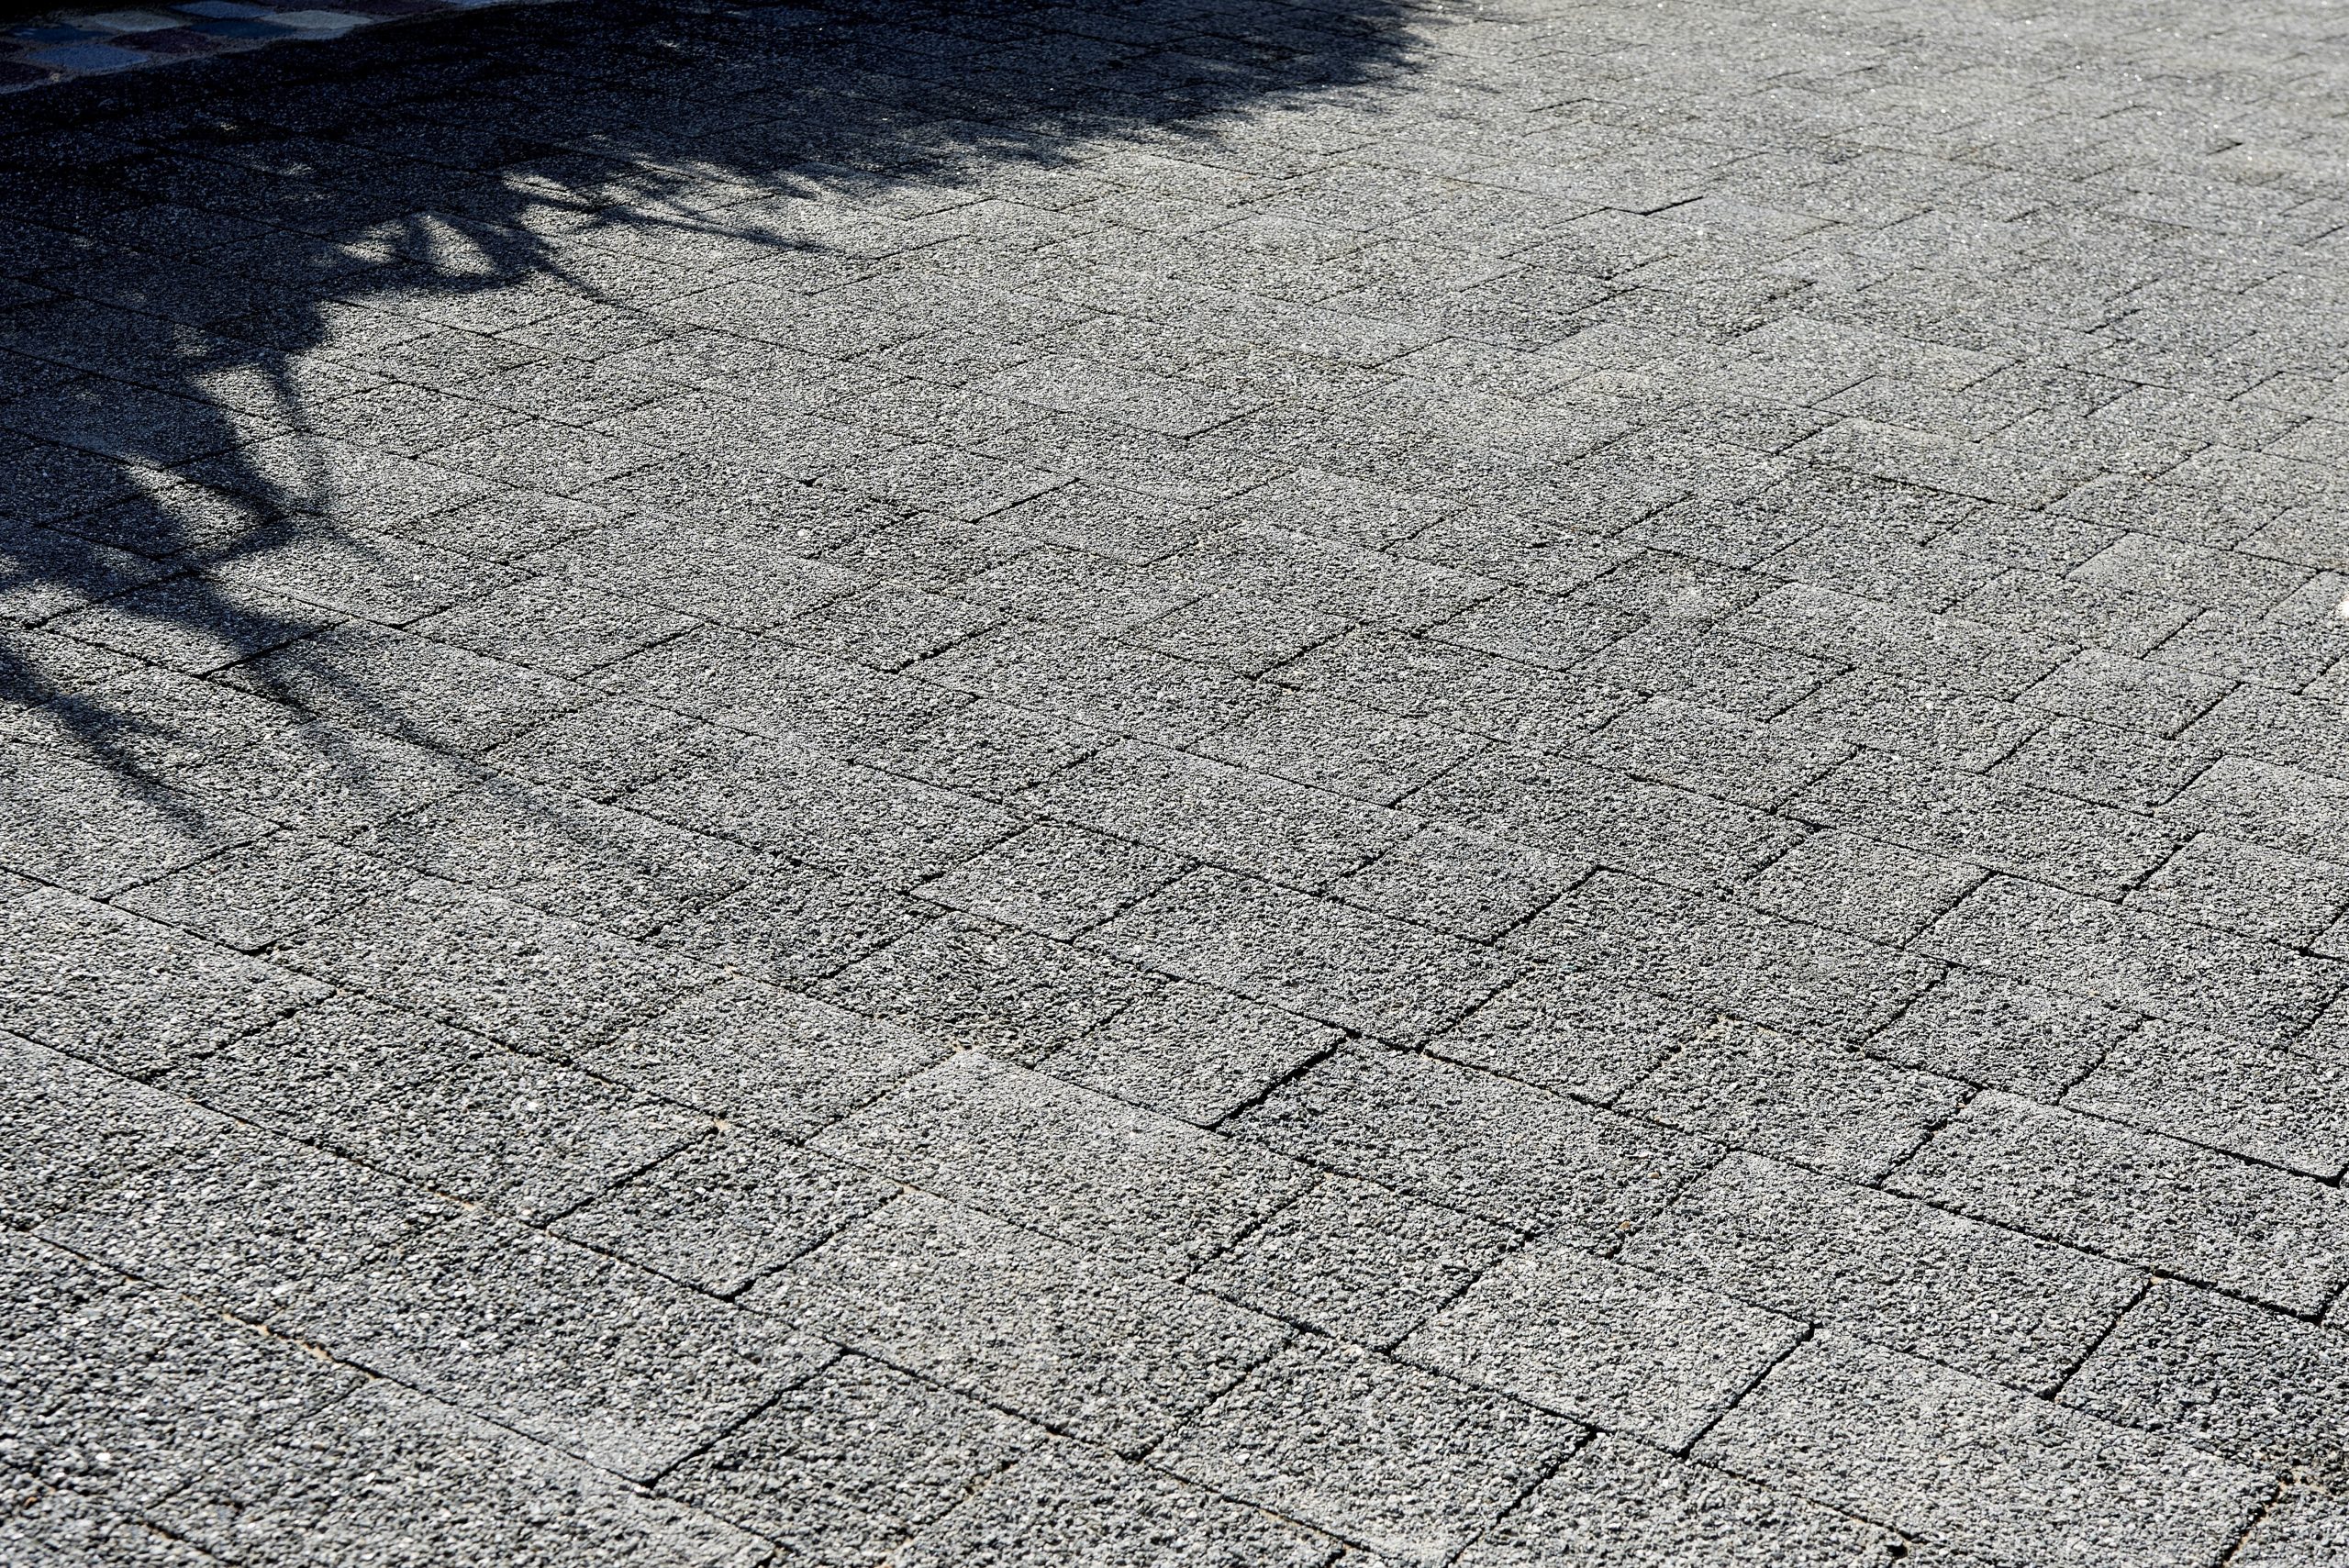 Invicta Onyx | Block Paving | Starbucks | Grey Paving | Invicta Granite pavers | Silver Pavers | Mixed size paving | Premium blocks | Commercial Paving | Granite Pavers | Granites | Black Paving | Charcoal